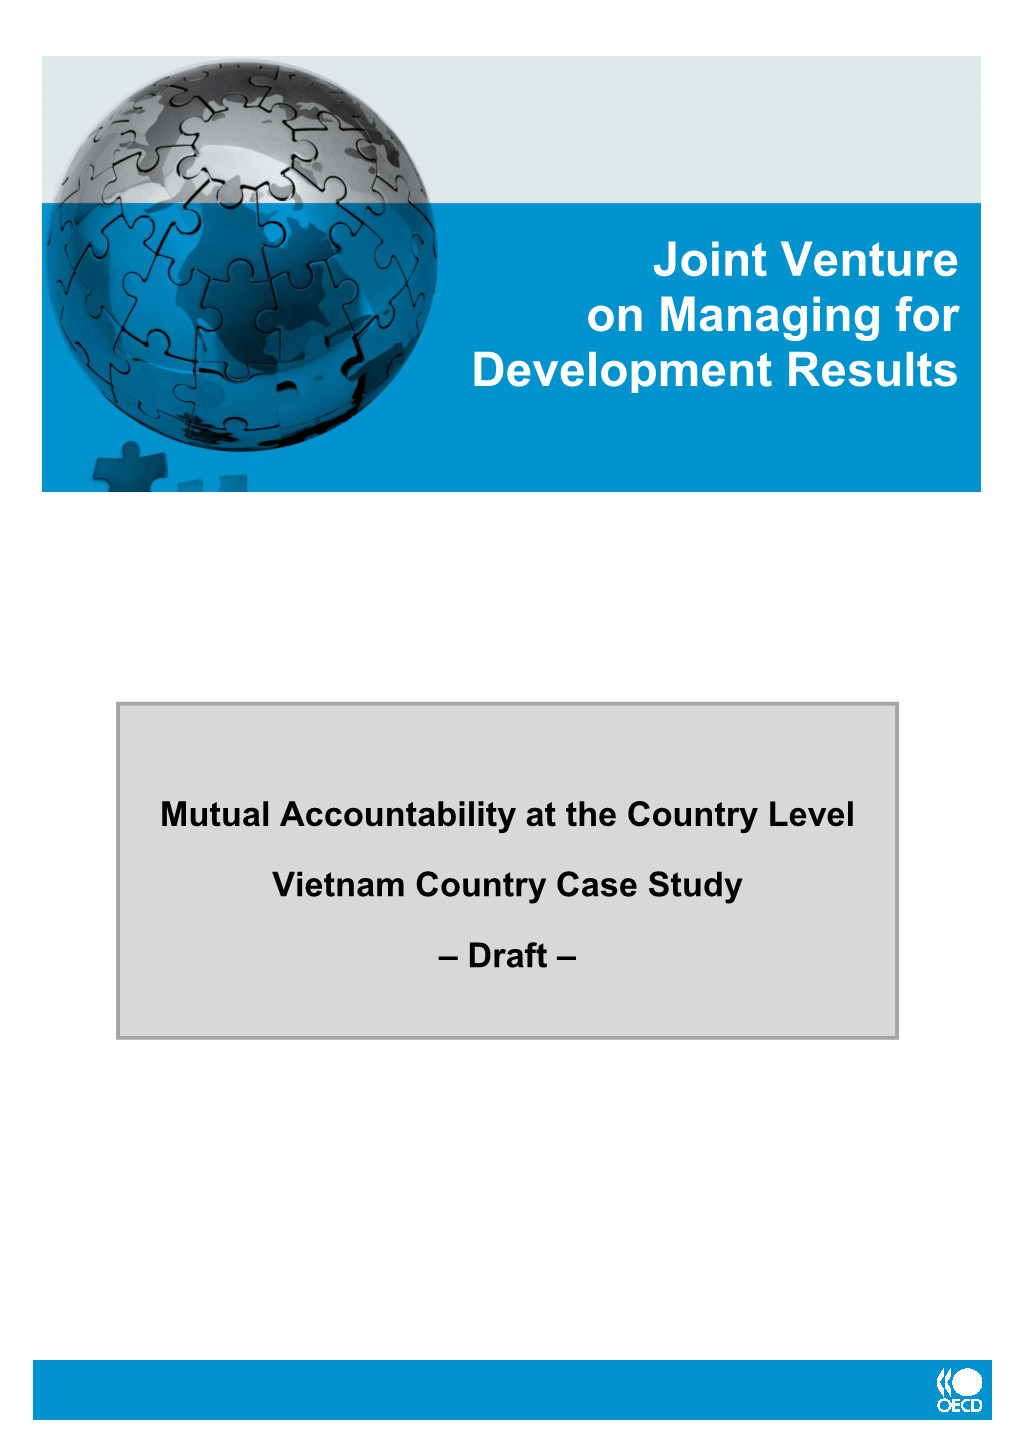 Mutual Accountability Draft Vietnam Case Study Accra 180808